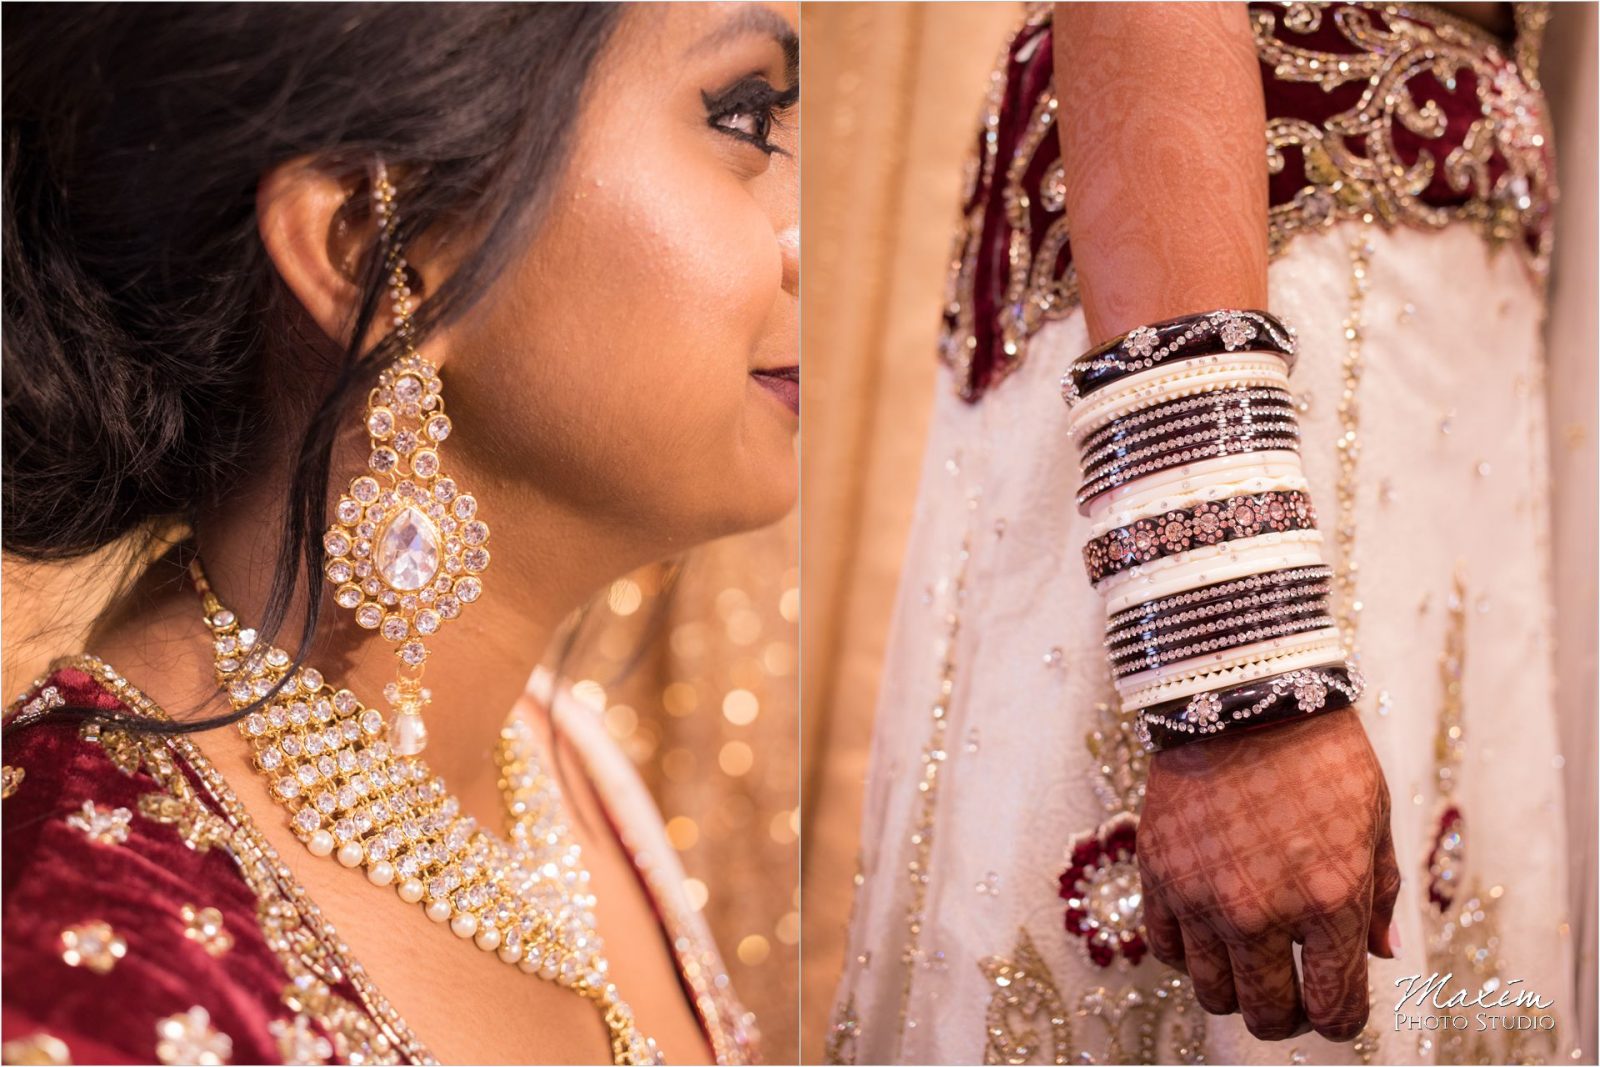 Savannah Center Indian Wedding Bride Preparations